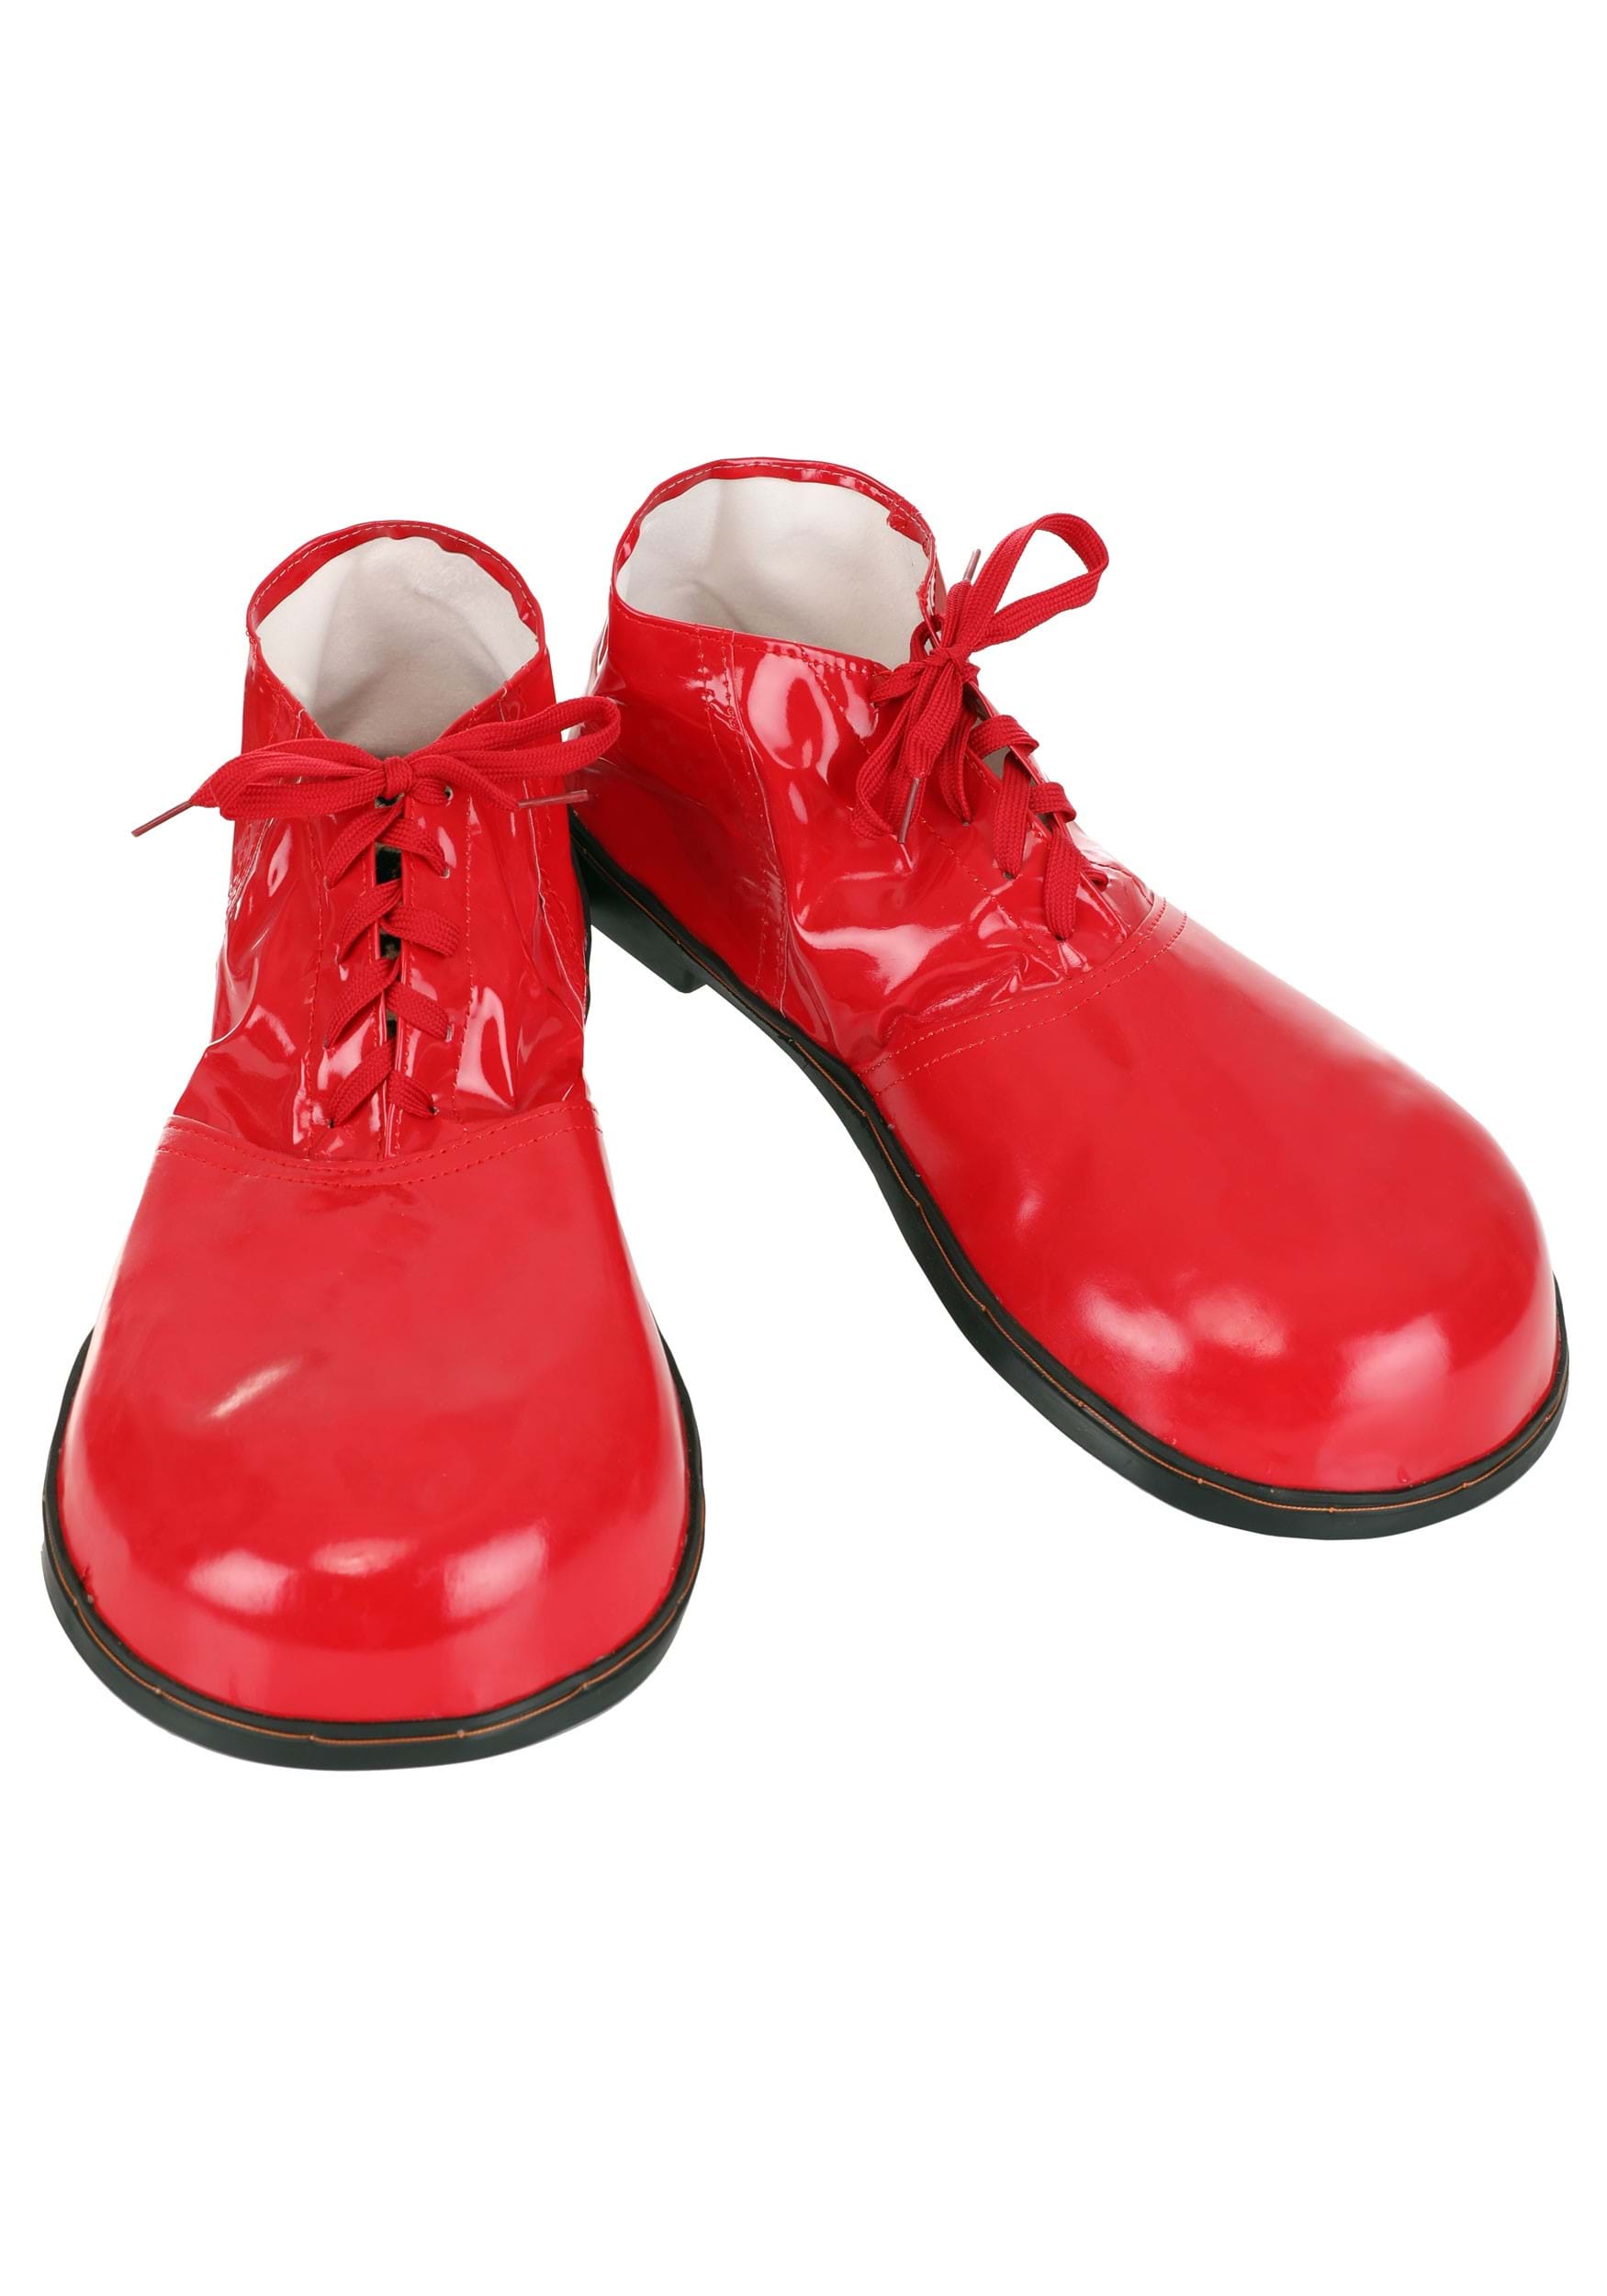 Red Clown Fancy Dress Costume Shoe Accessories